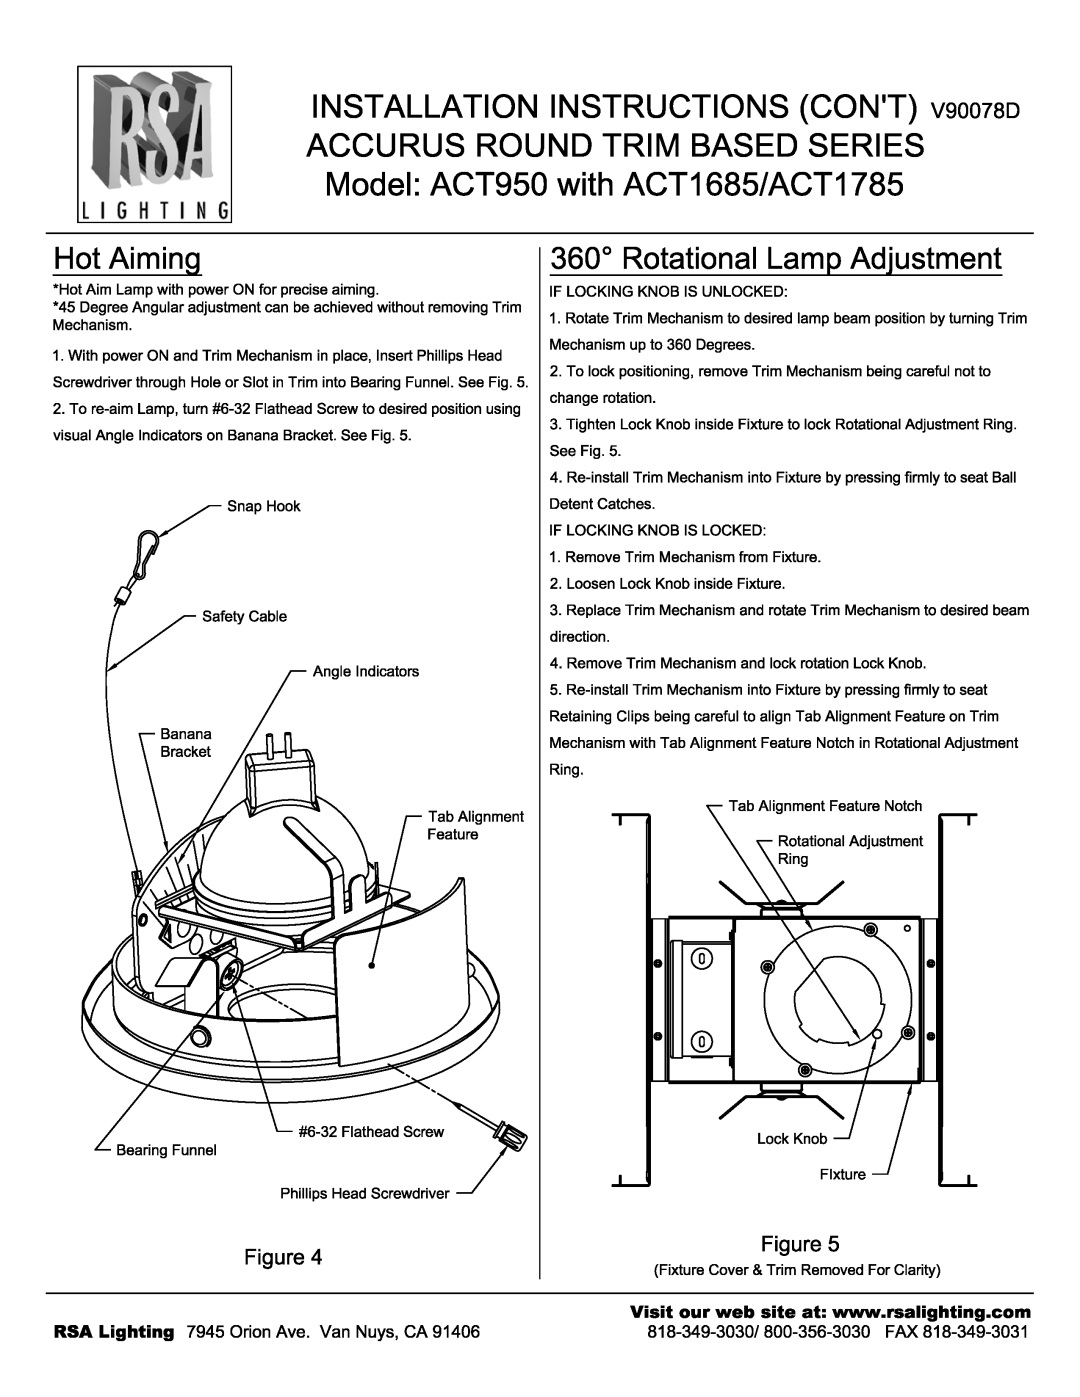 Cooper Lighting ACT1785 manual 